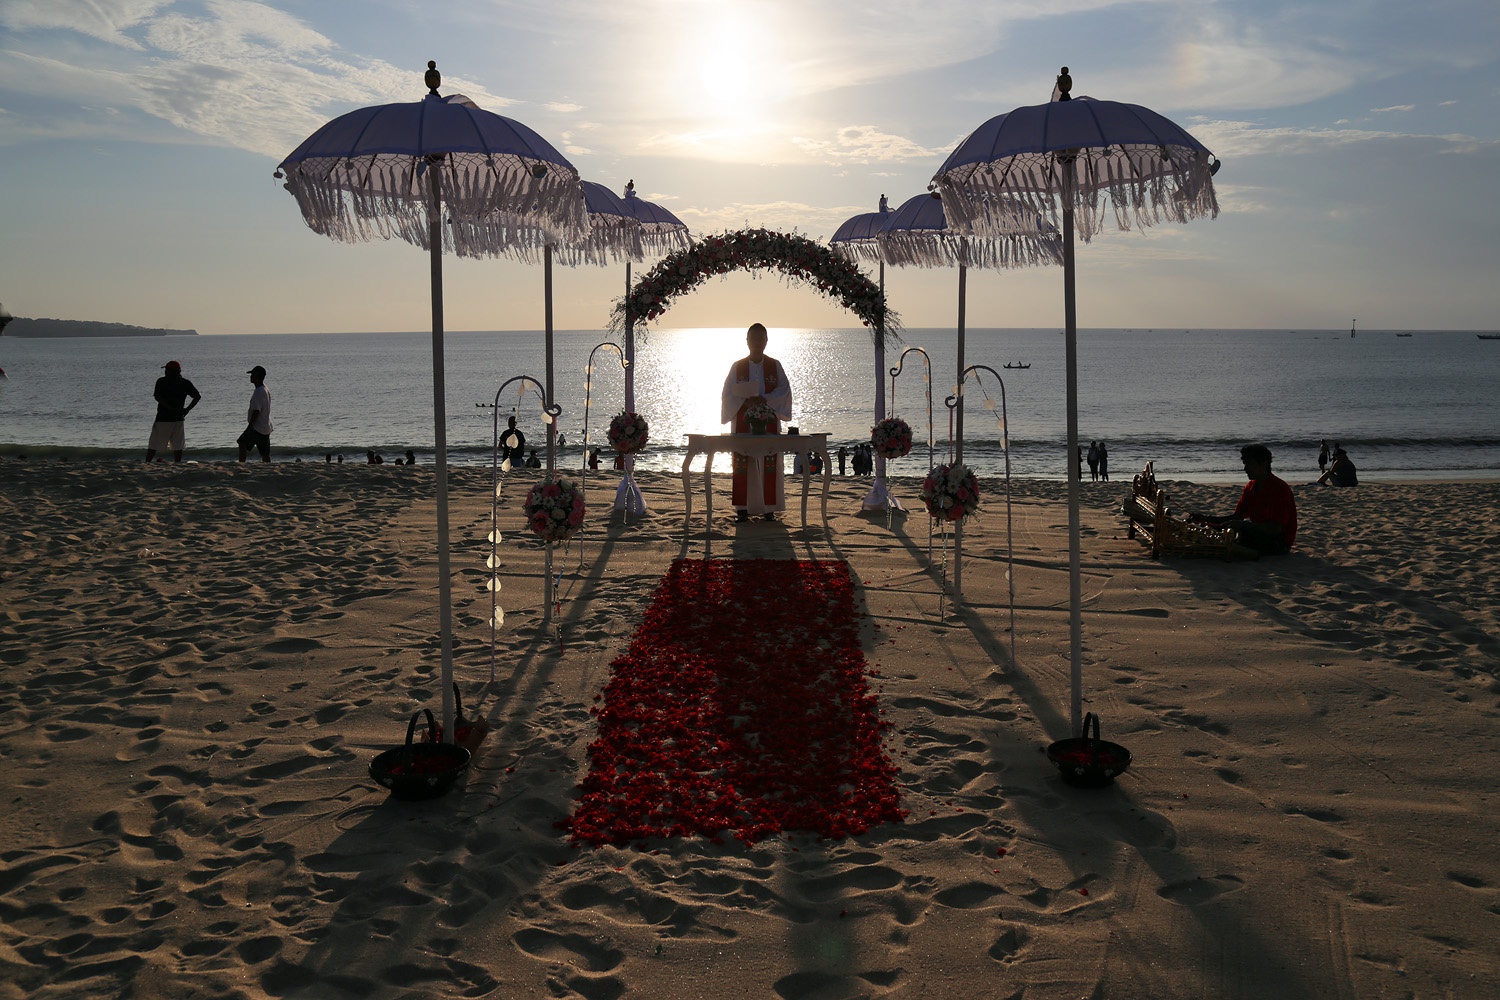 bill-hocker-wedding-venue-kendongnan-beach-jimbaran-bali-indonesia-2016